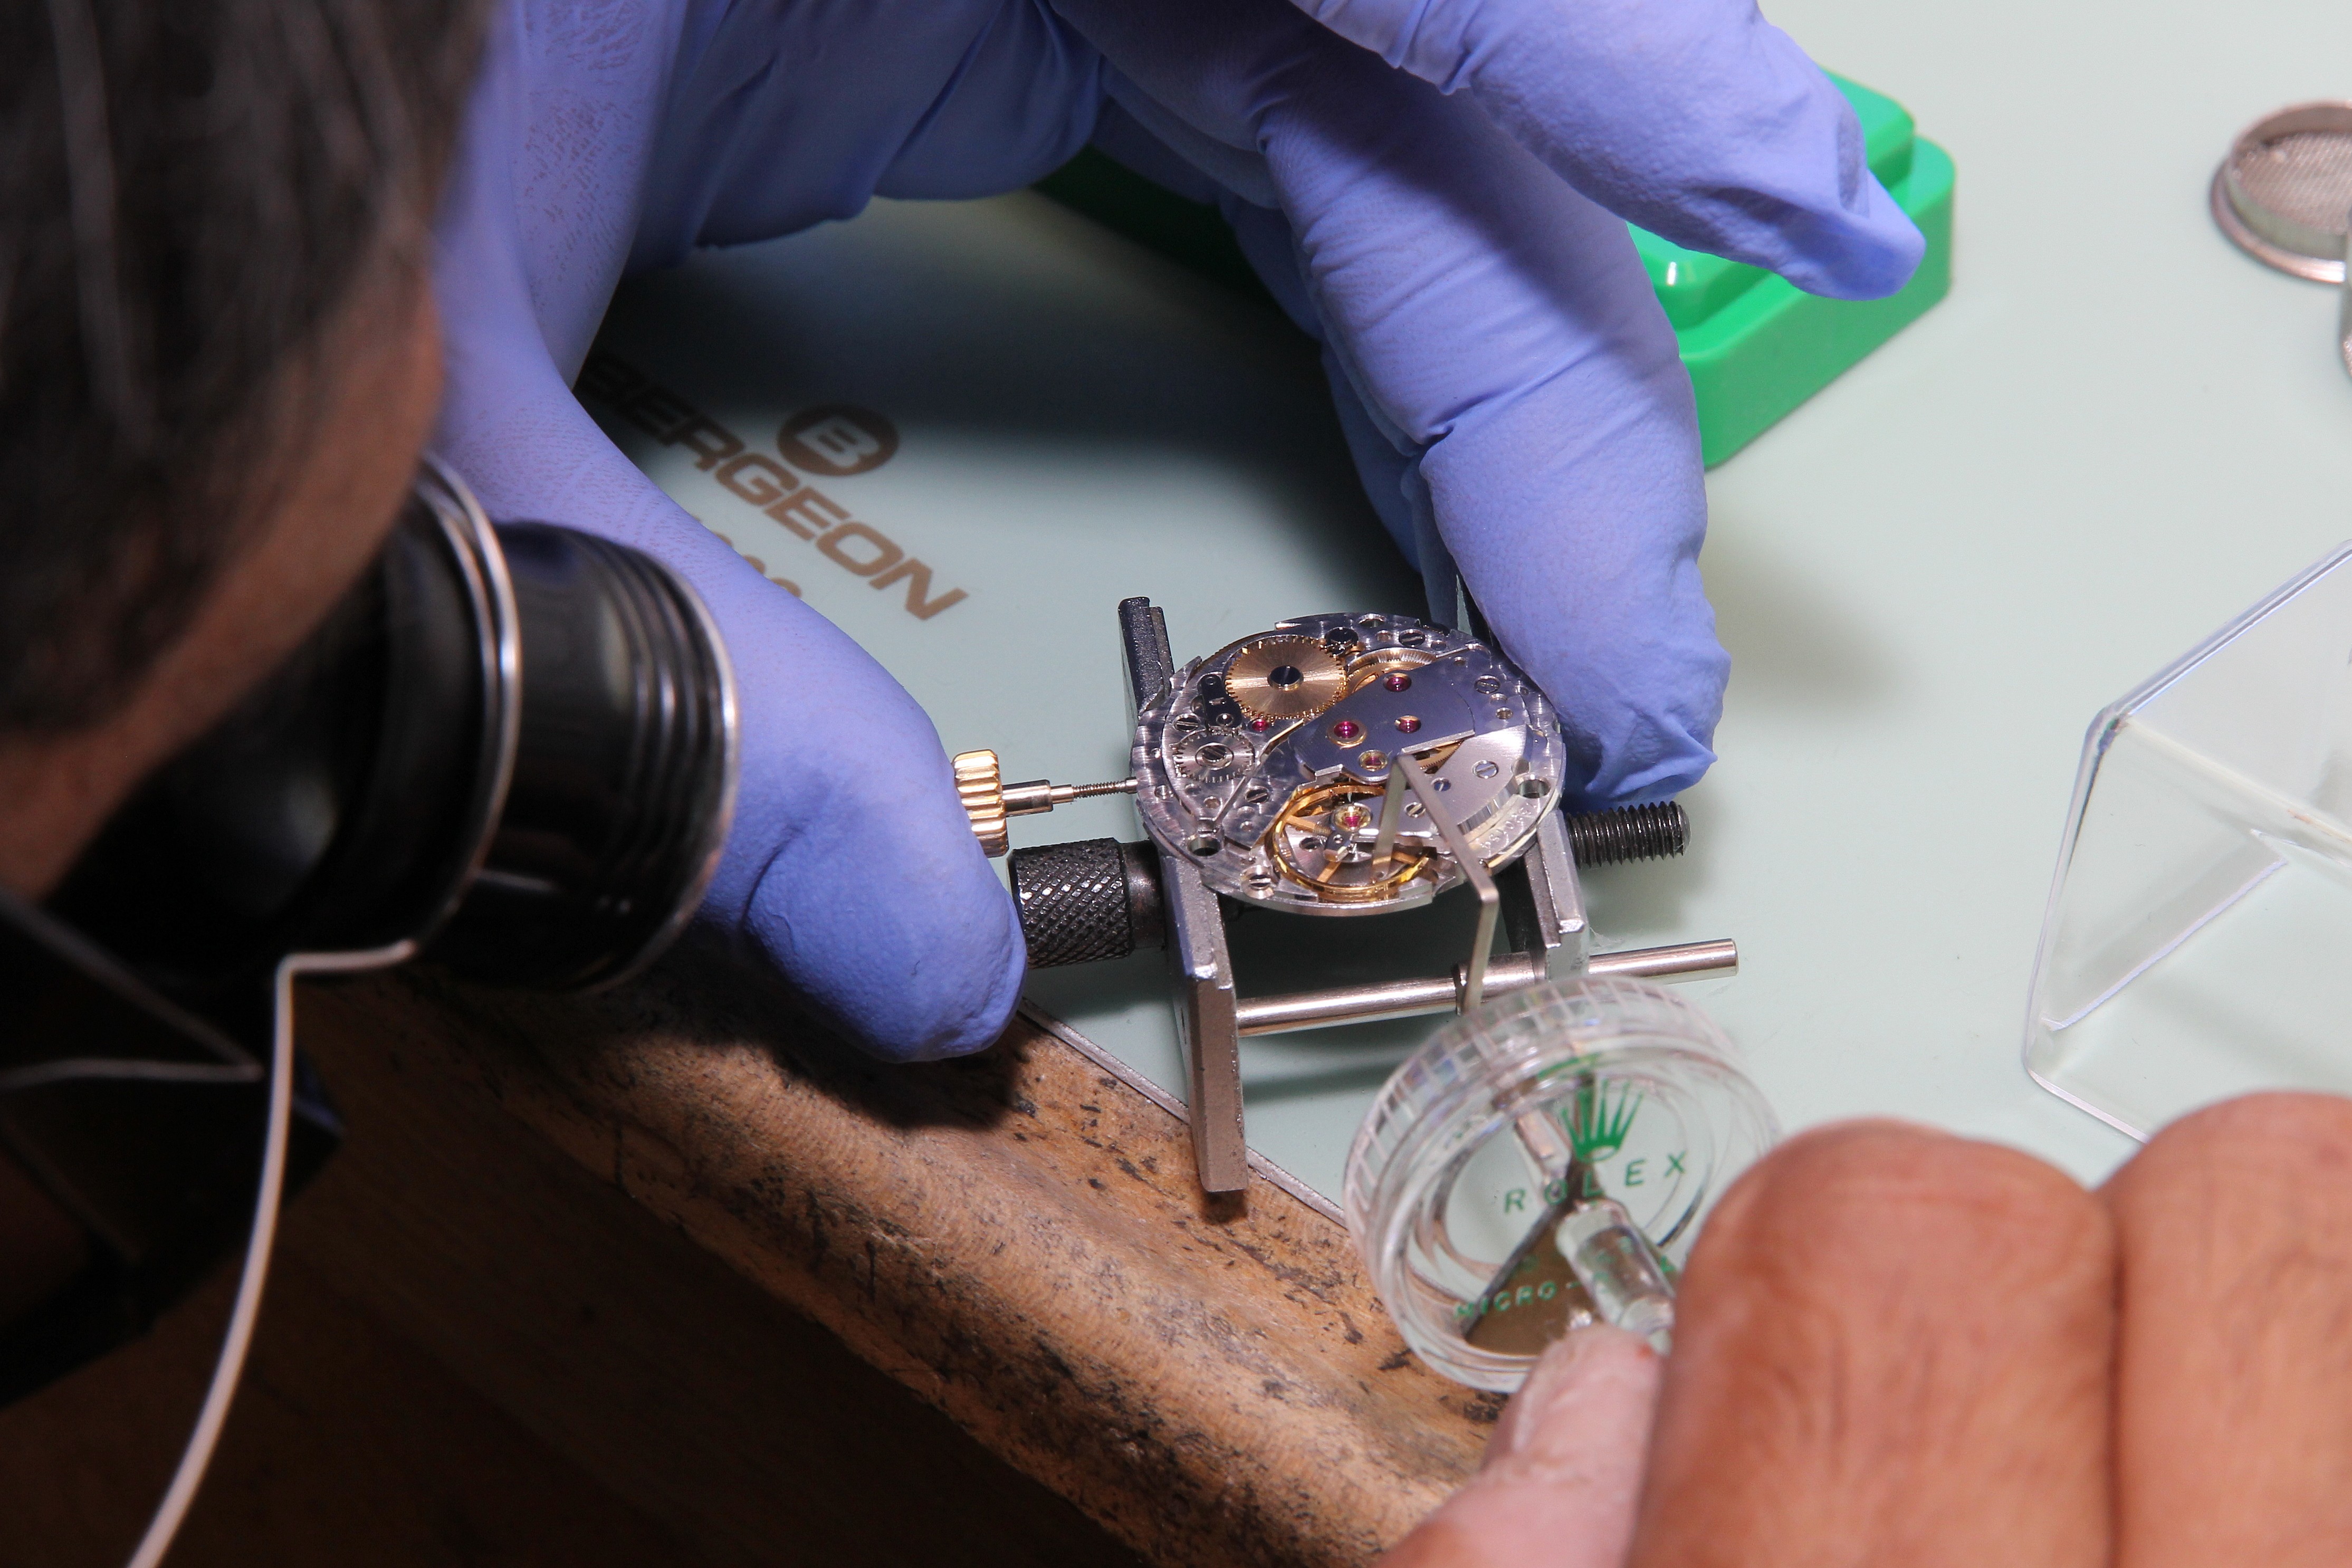 Watch Repair Experts In Orange County